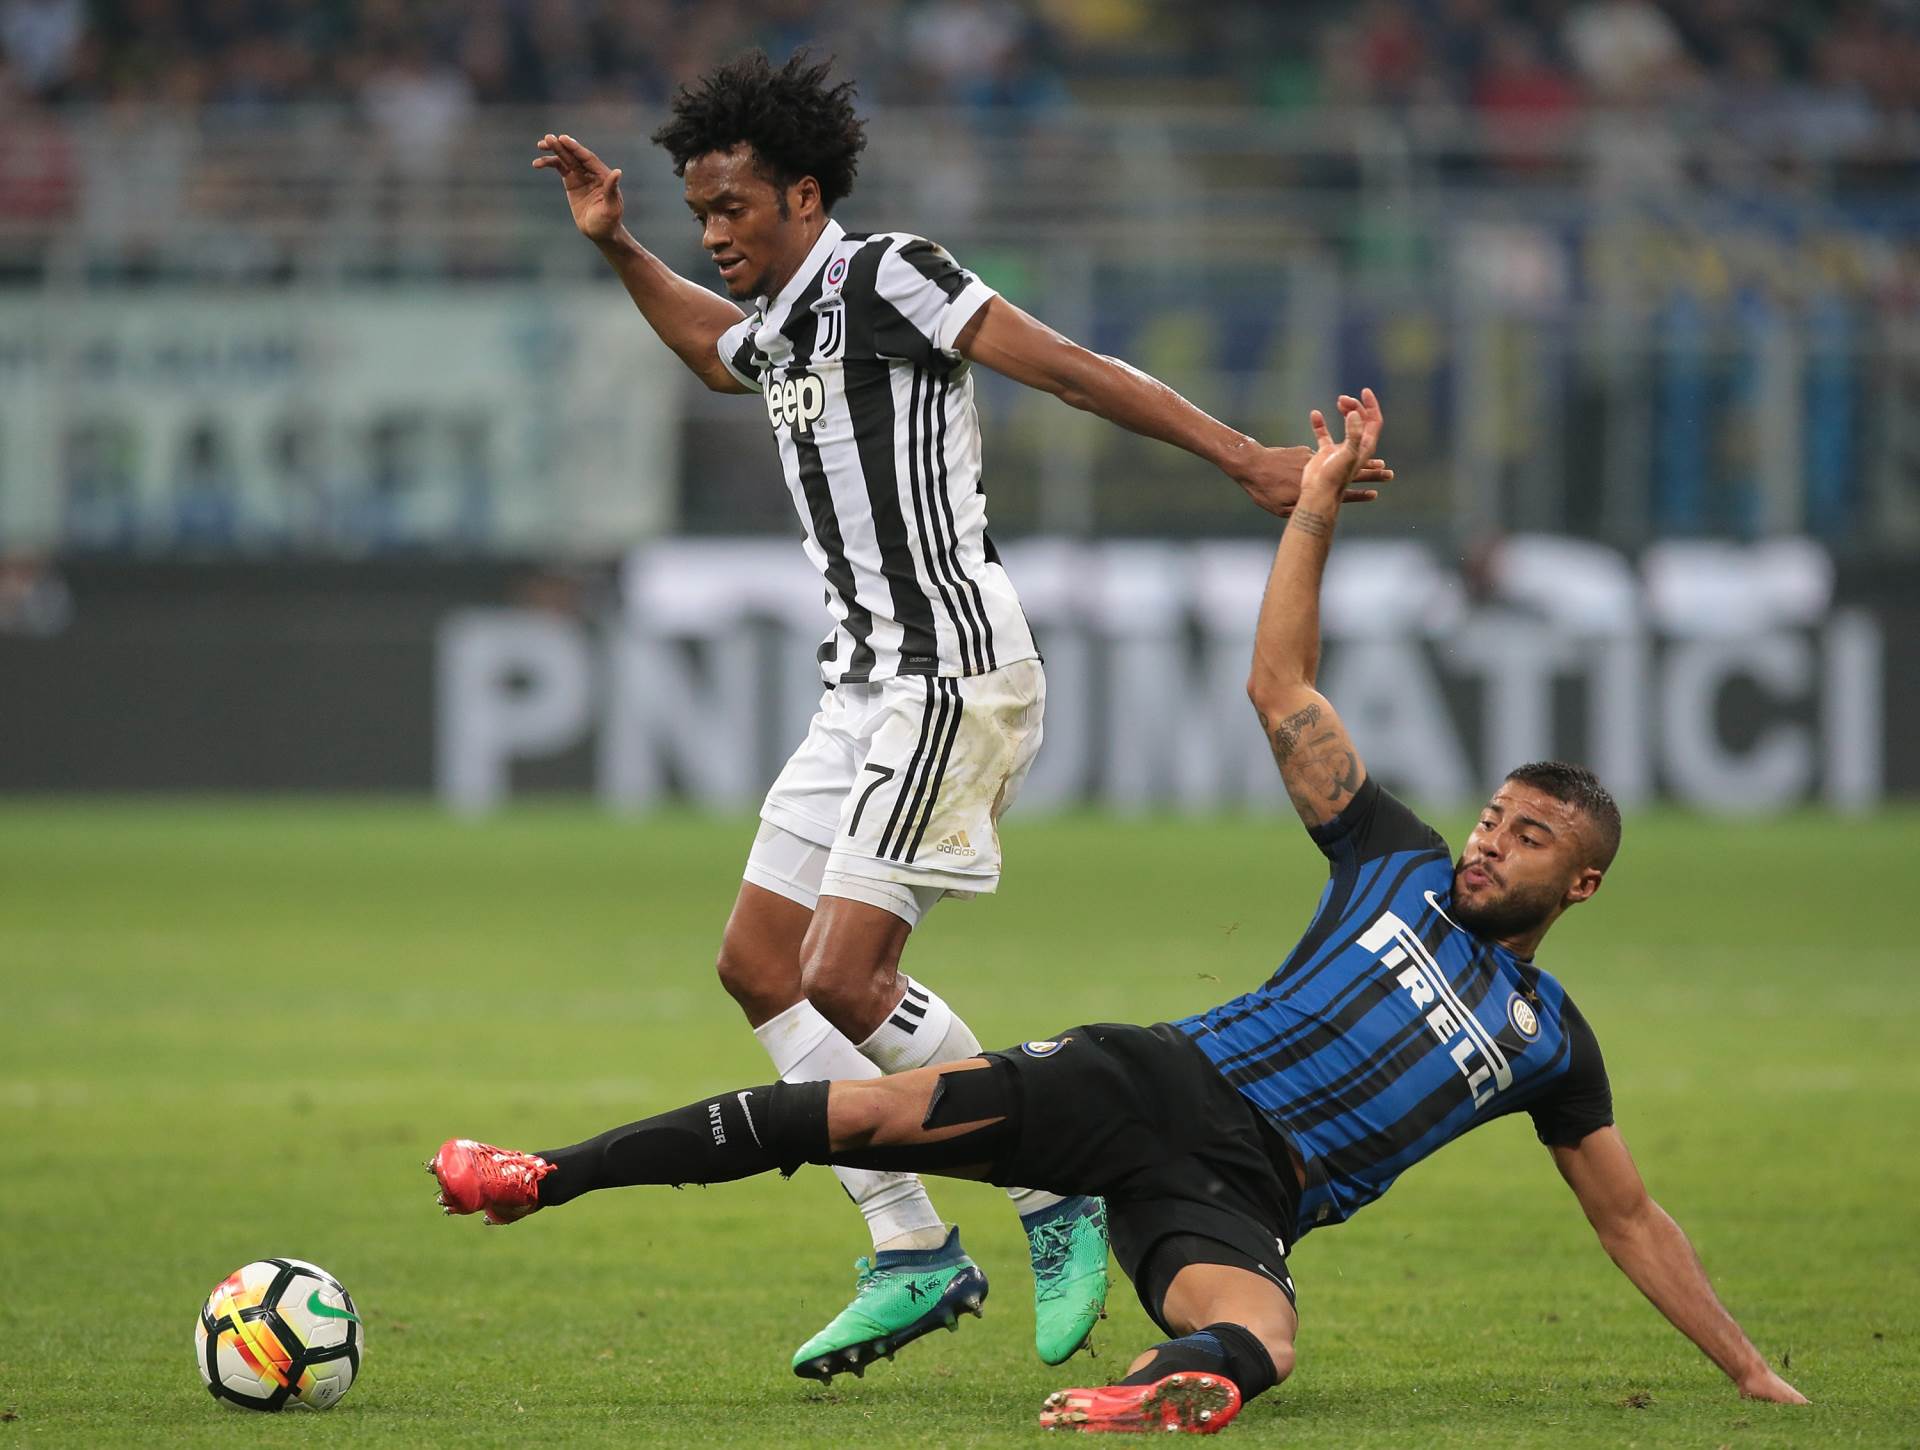  Novi kalčopoli? Sporna utakmica Juventus - Inter 2018 